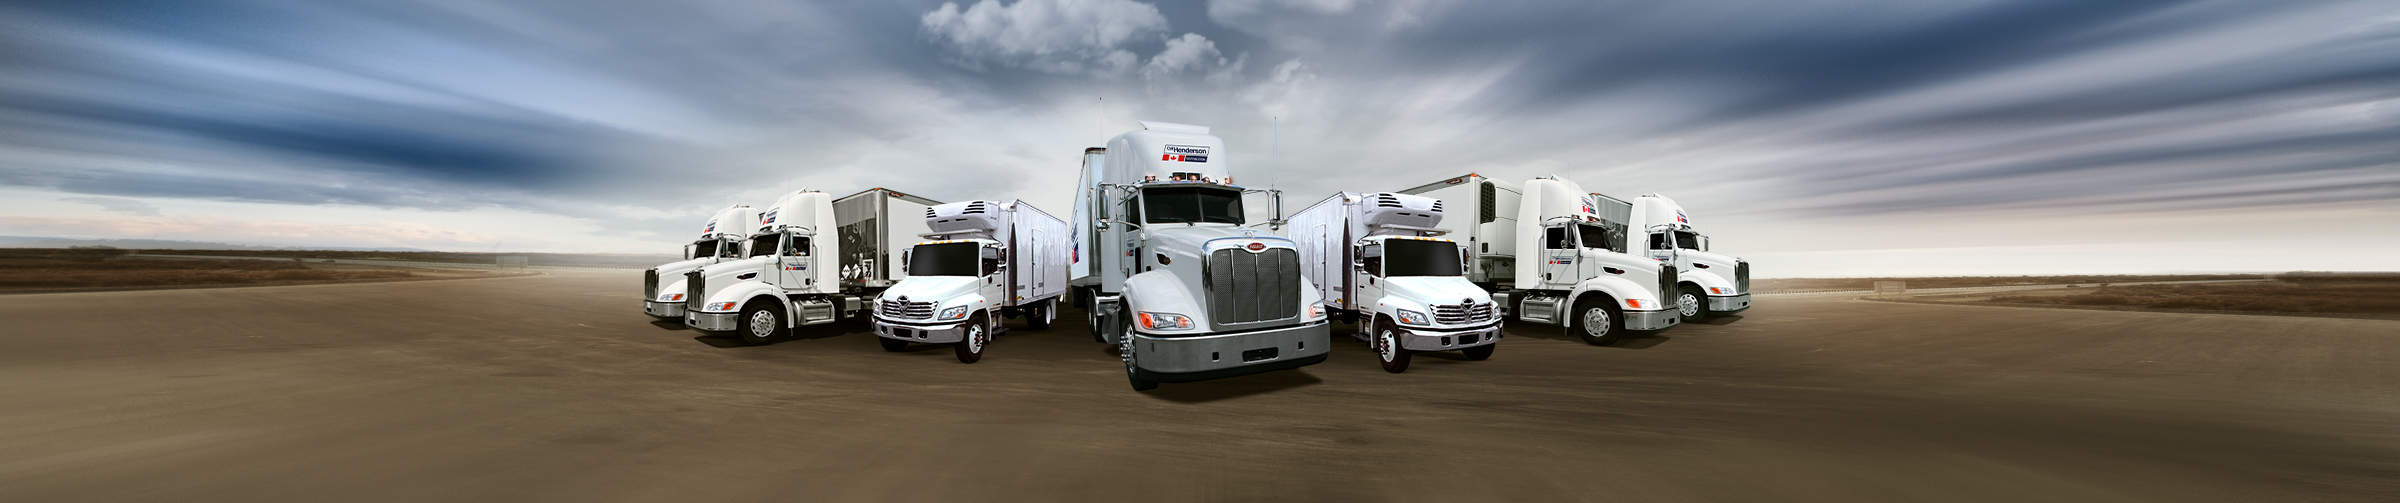 CW Henderson Distribution trucking equipment